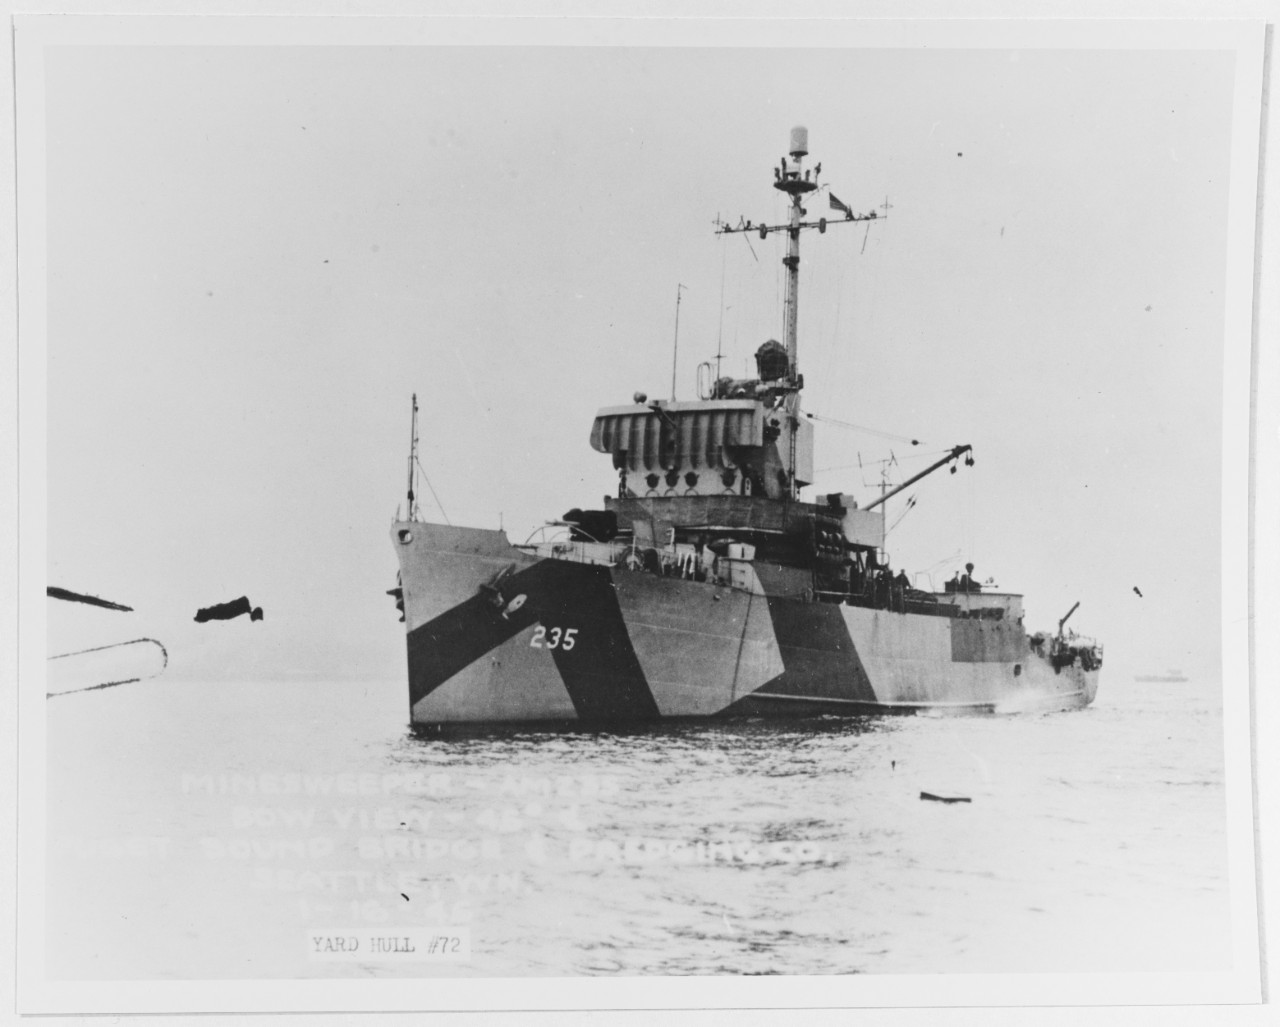 USS FIXITY (AM-235)